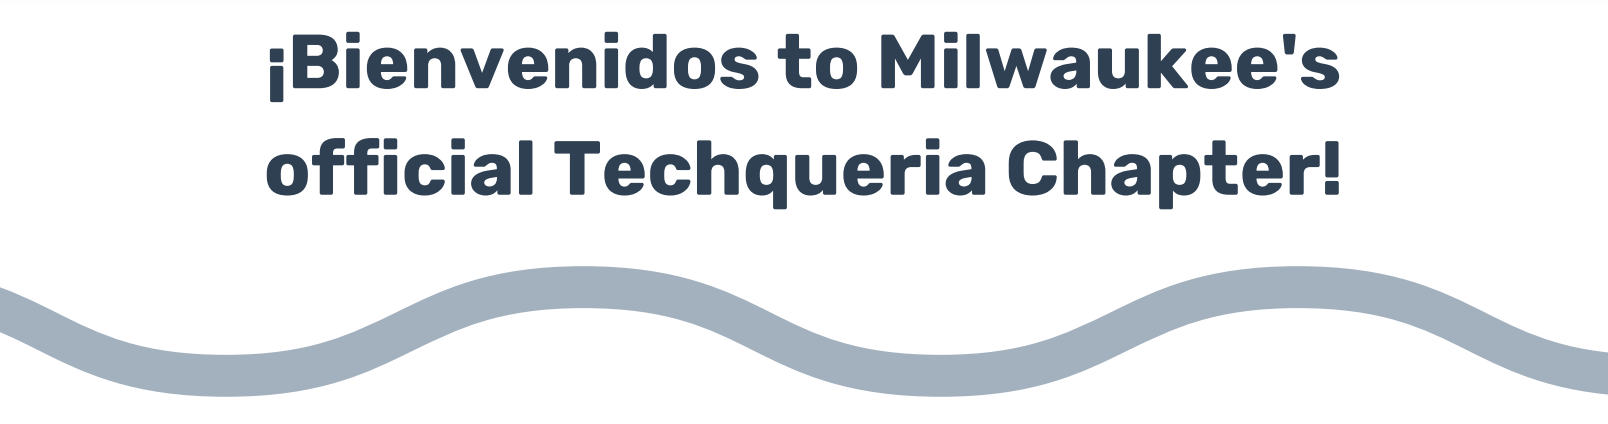 ¡Bienvenidos to Milwaukee's official Techqueria Chapter!